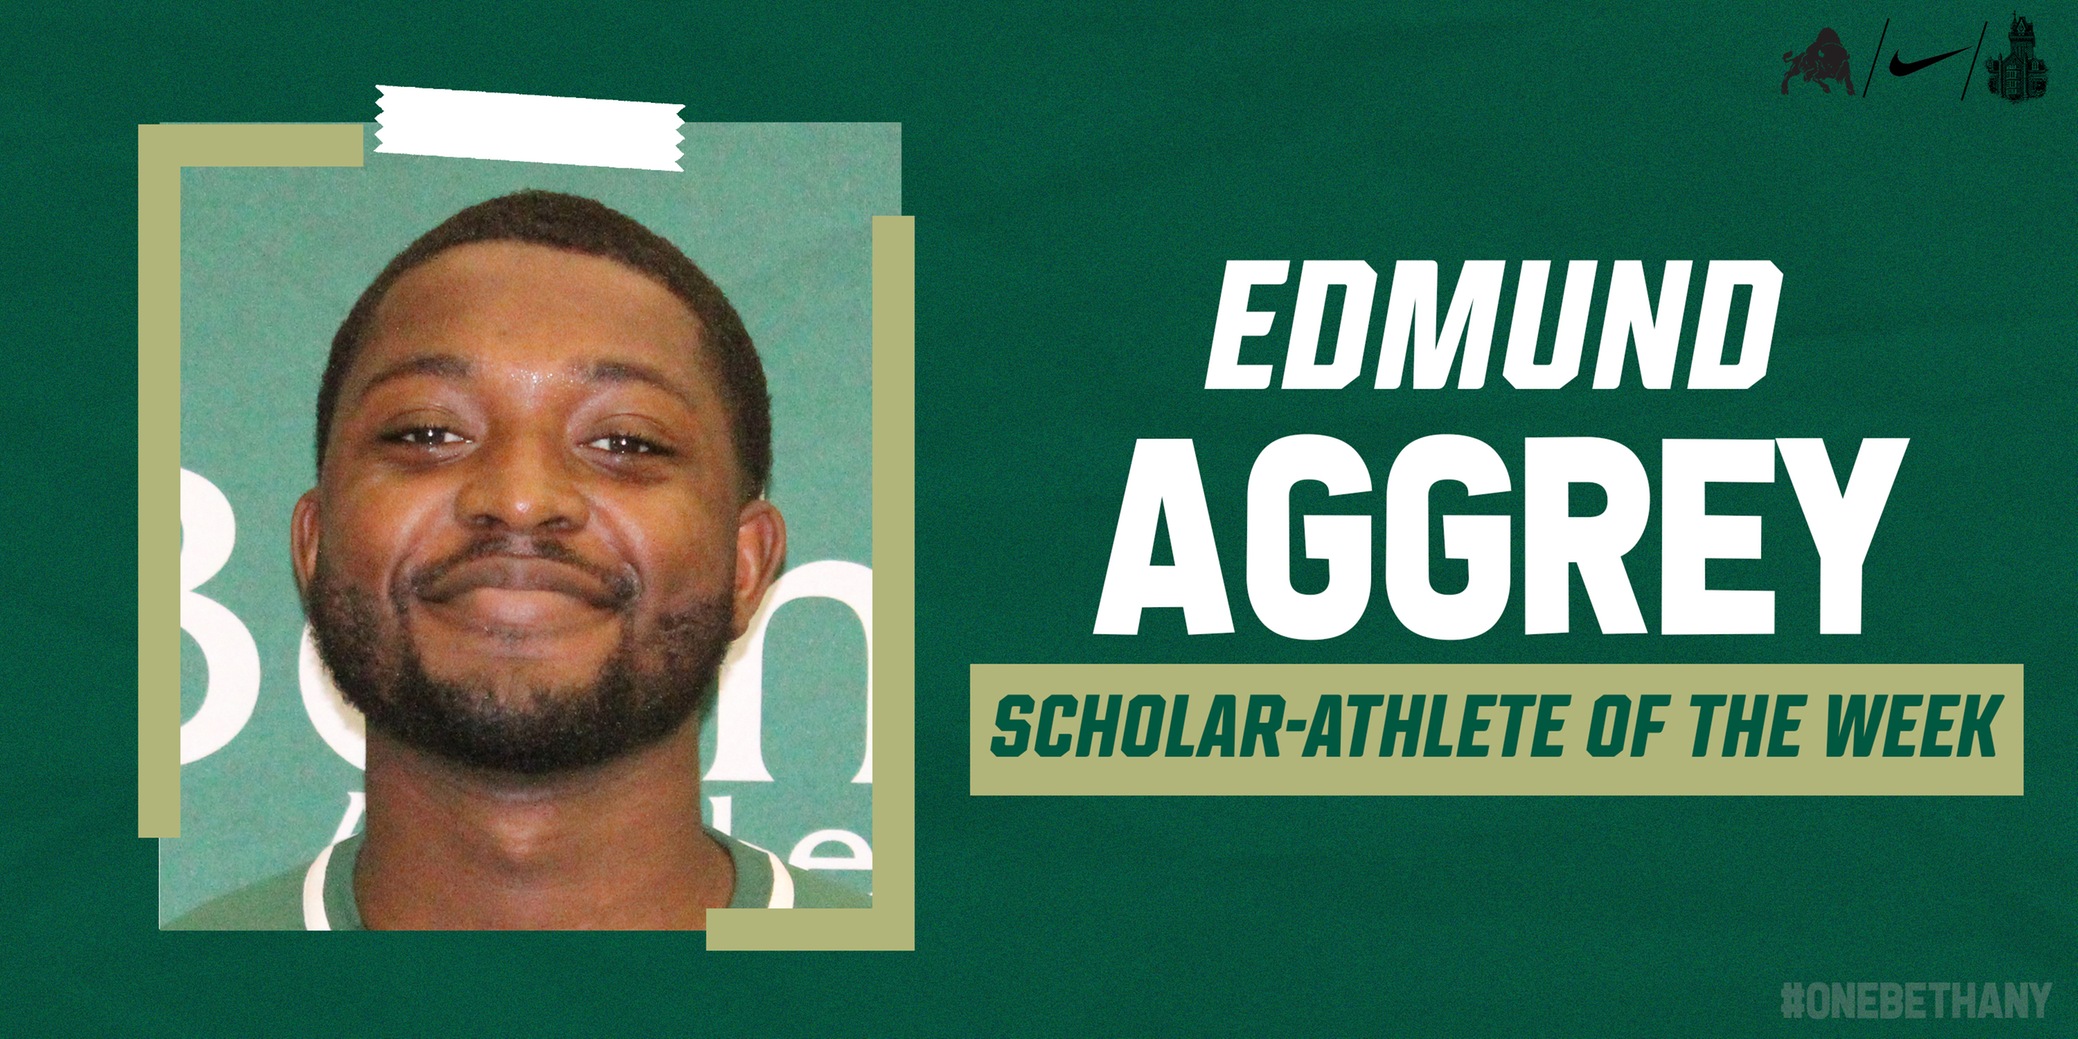 Bison Scholar-Athlete Spotlight: Edmund Aggrey